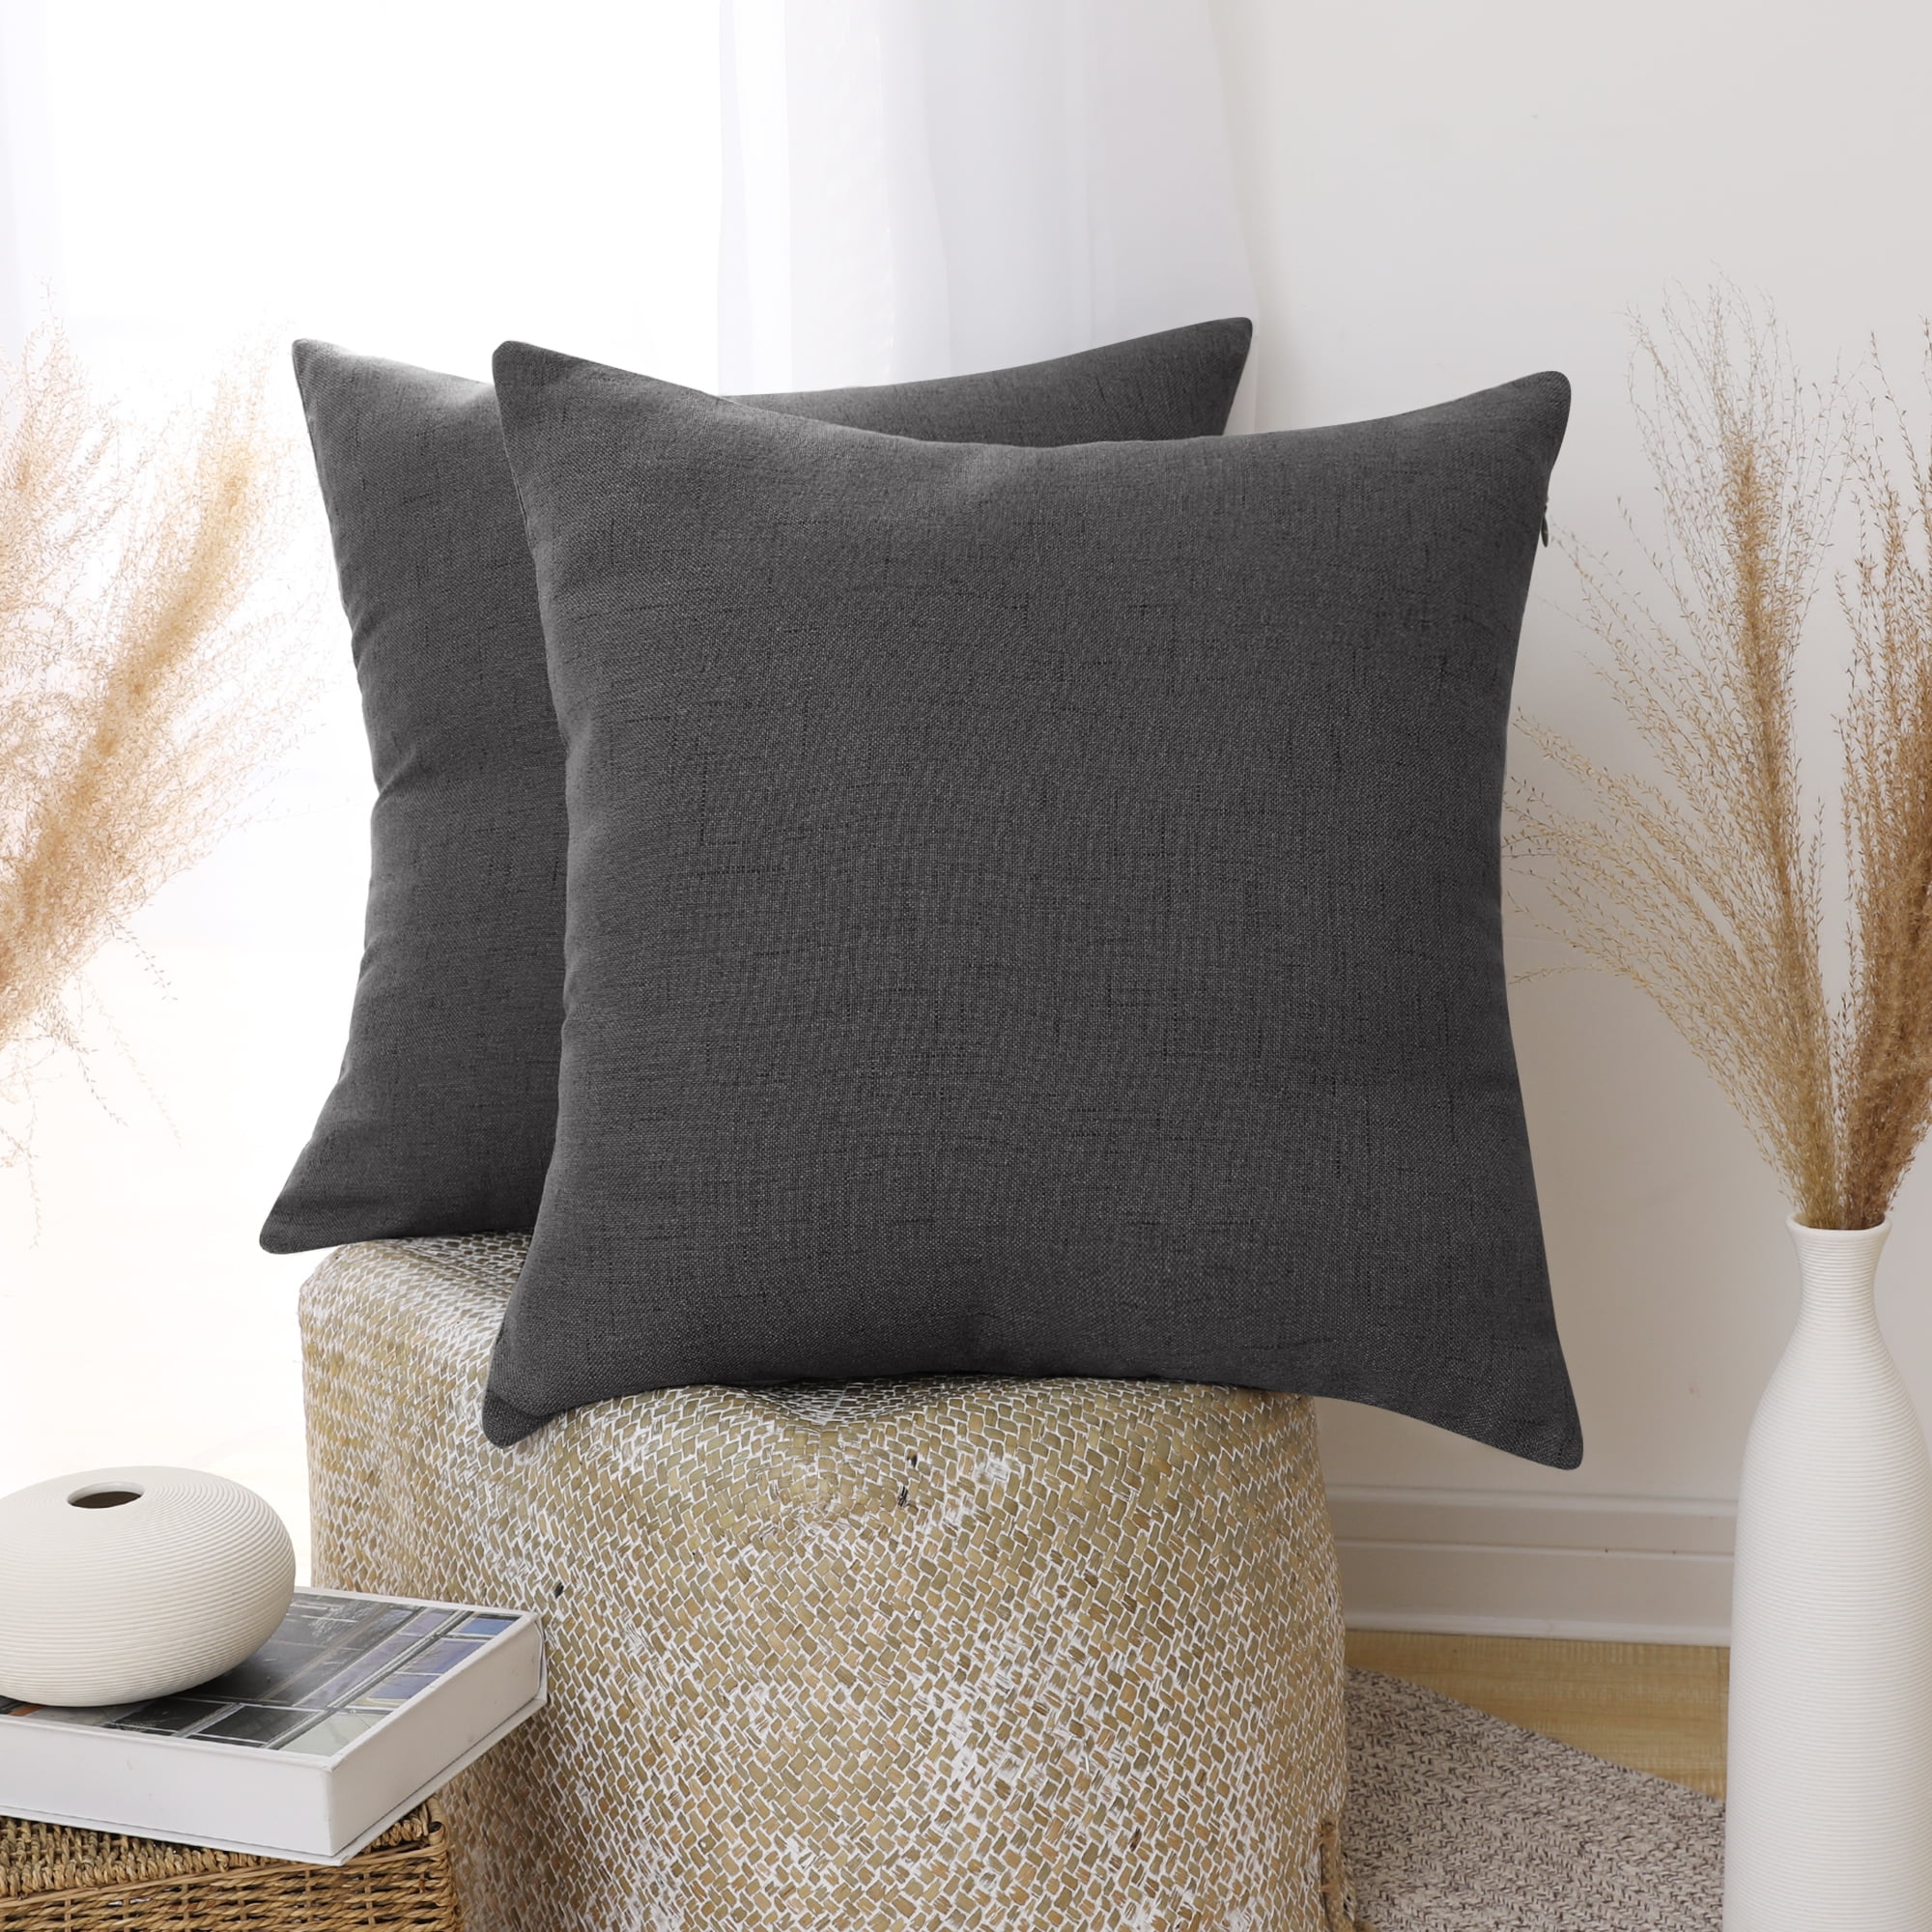 Deconovo Decorative 18x18 Pillow Covers Black Square Faux Linen